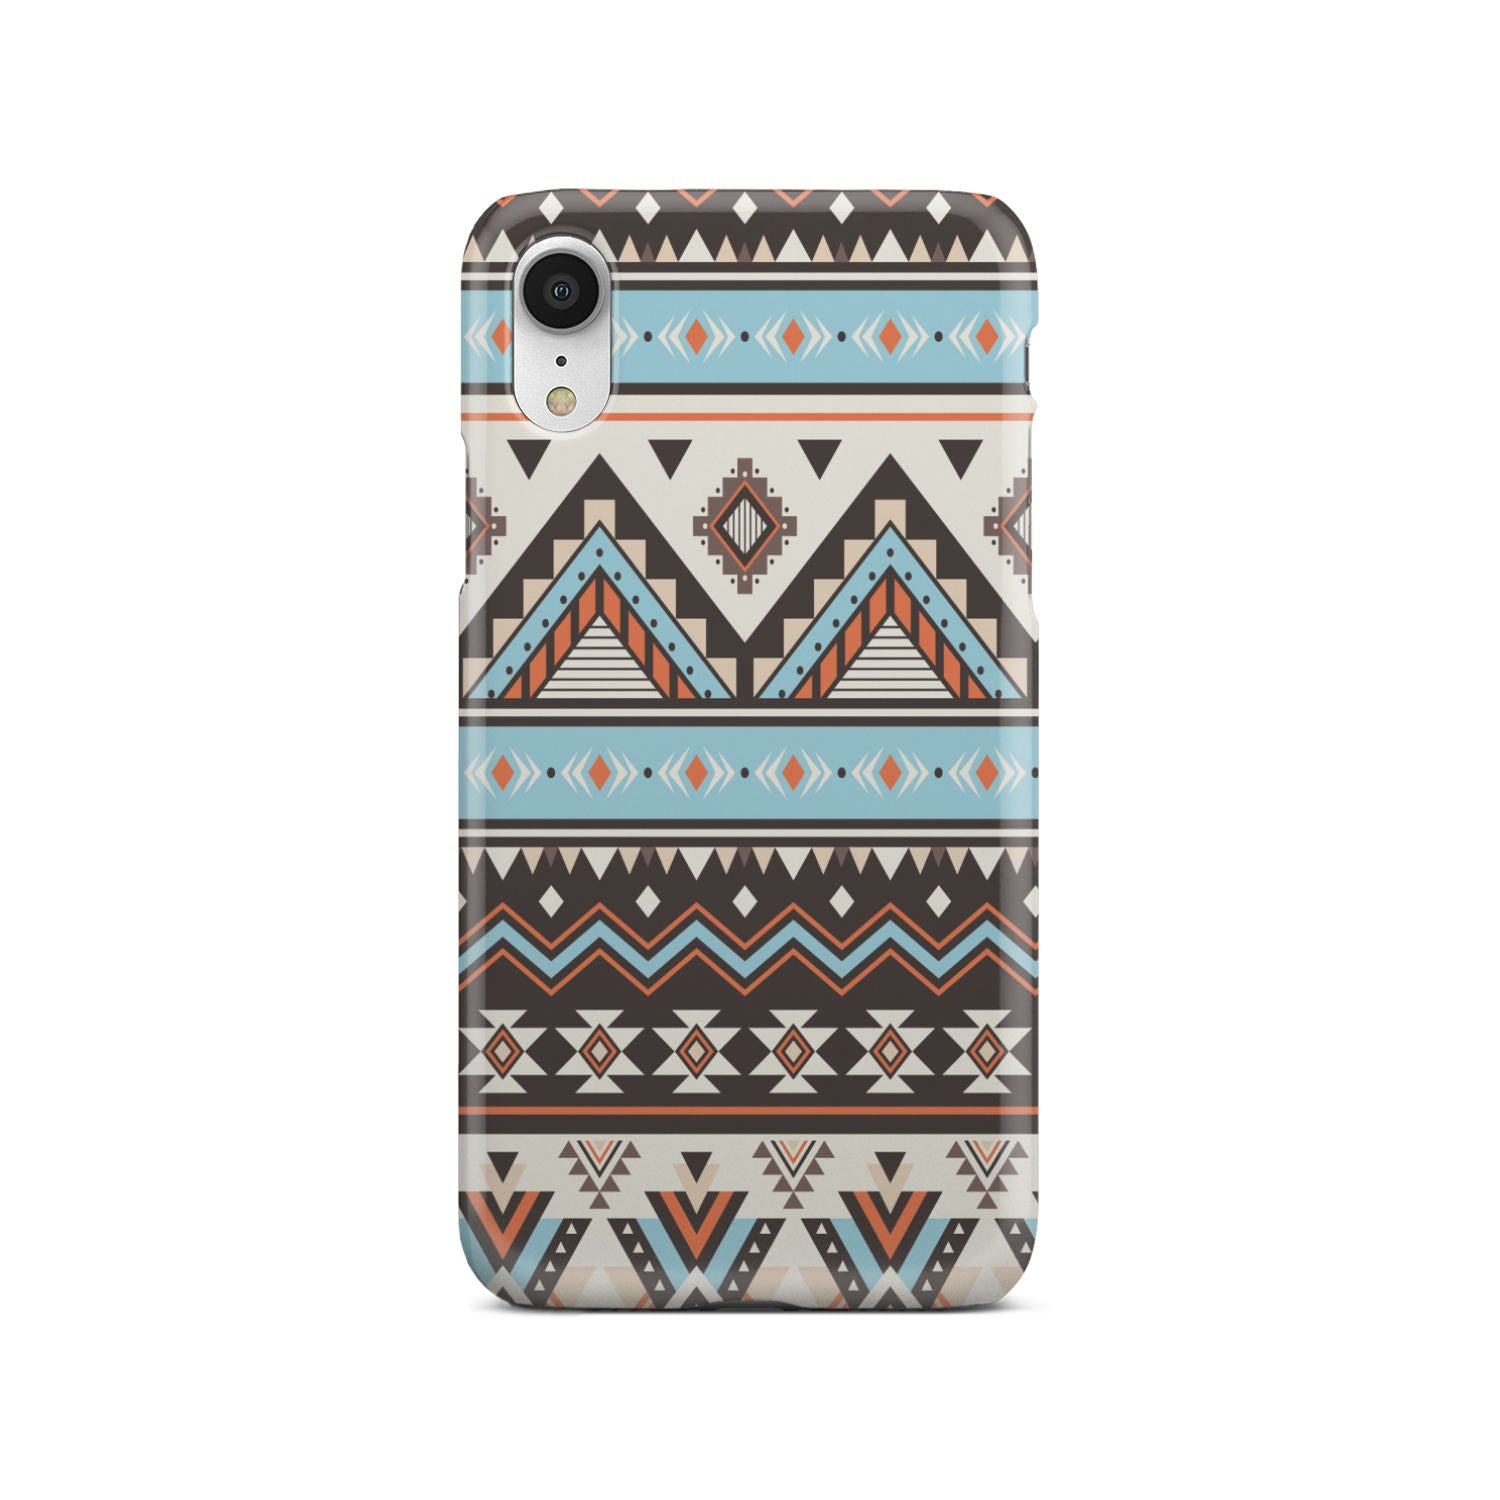 Powwow Store gb nat00604 tribal striped seamless pattern phone case